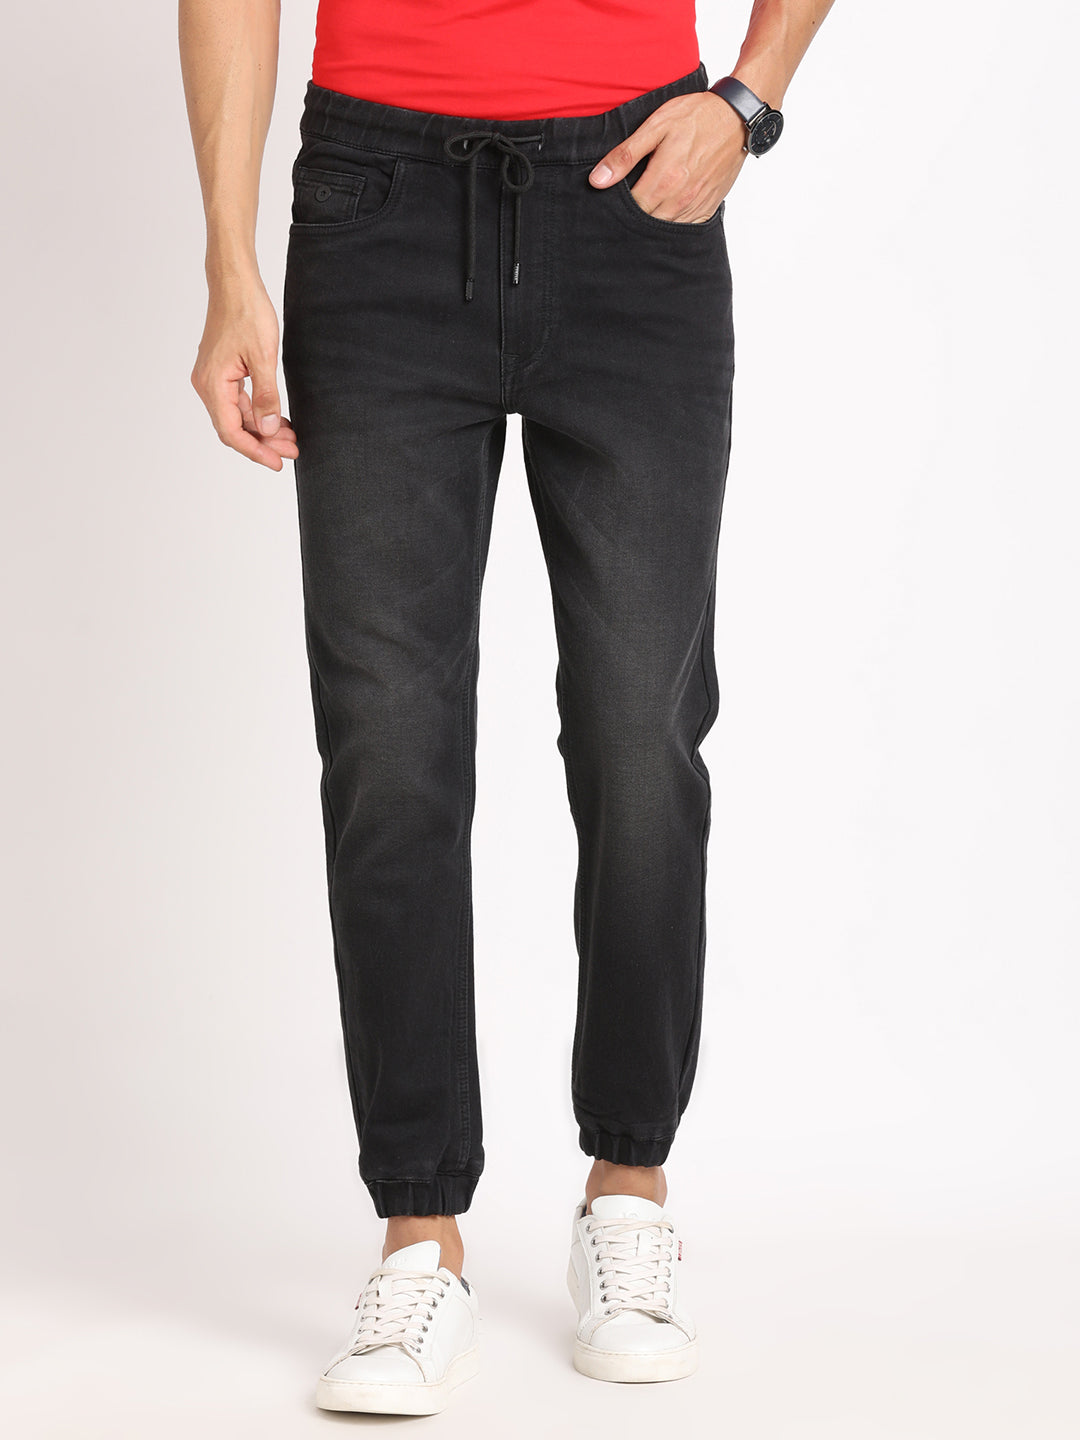 Cotton Stretch Black Plain Flat Front Casual Jogger Jeans